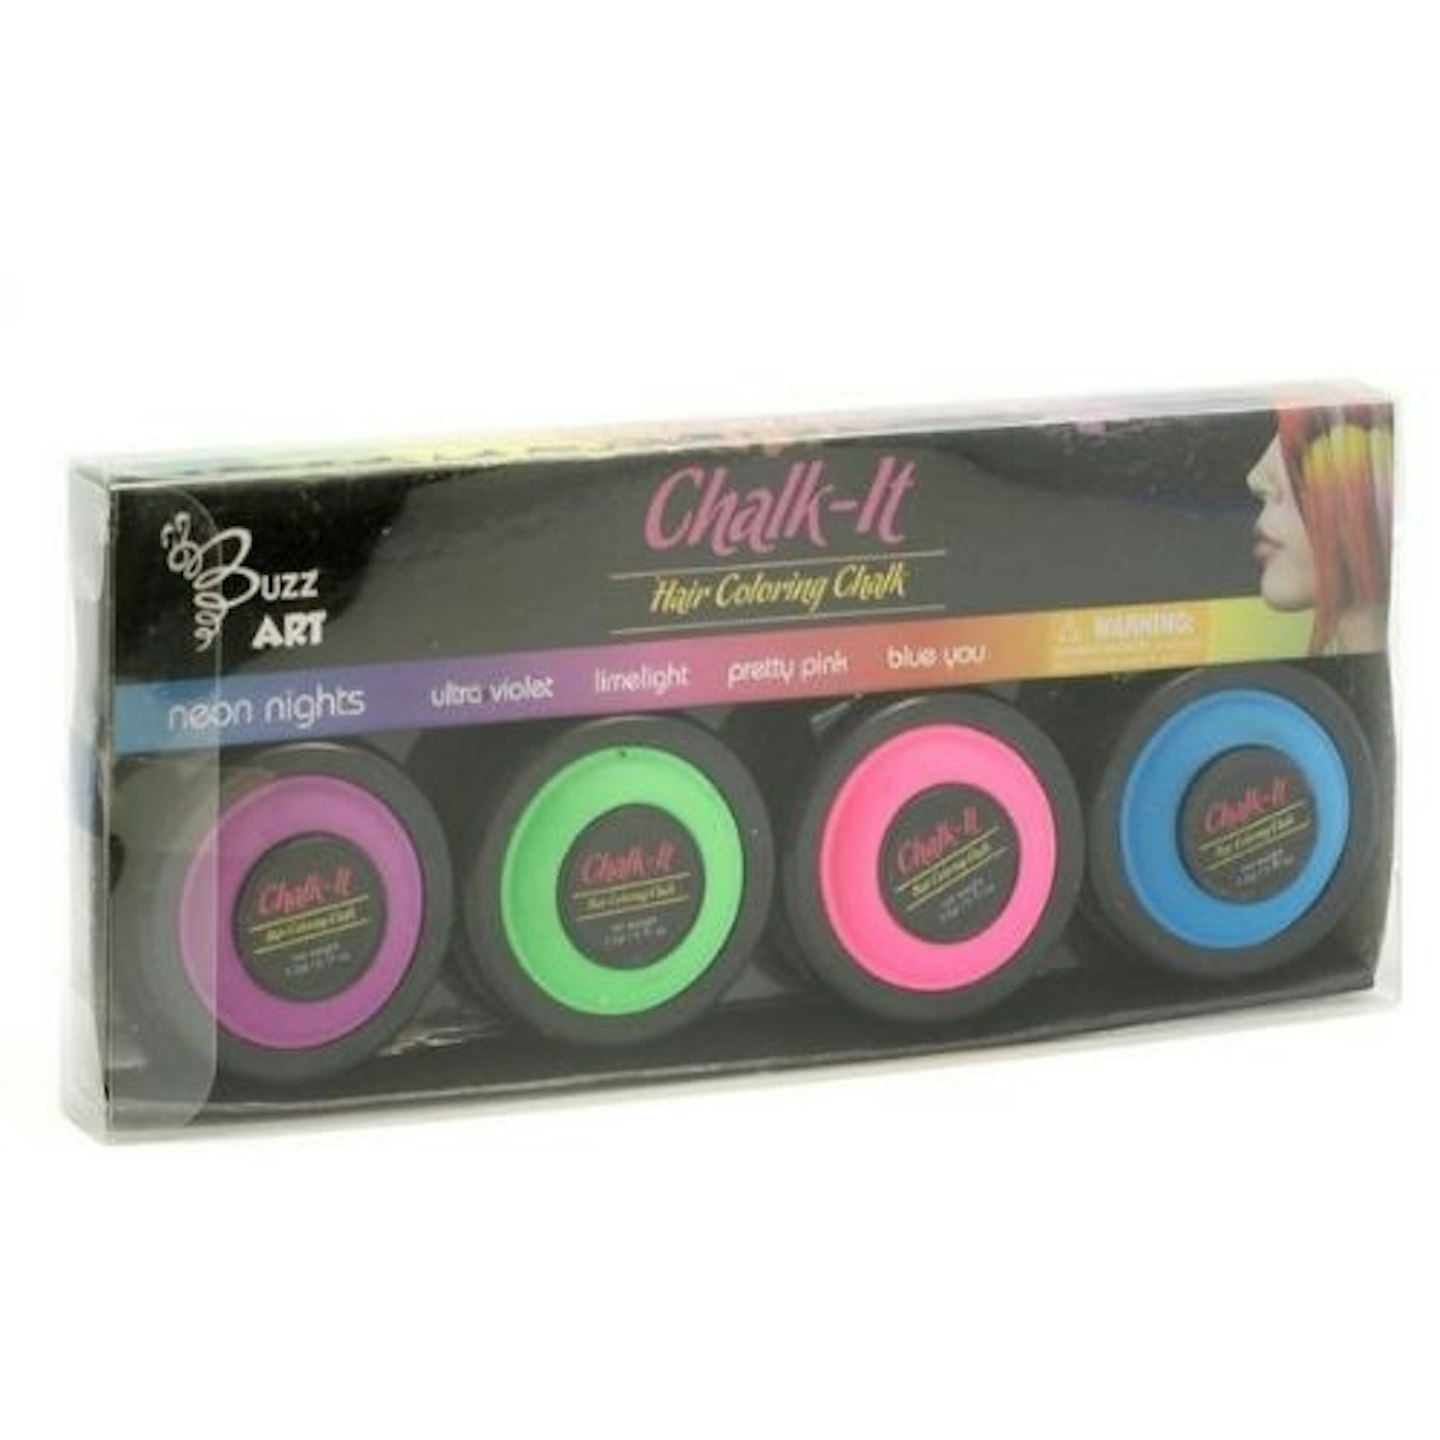 Buzz Art Chalk-It Hair Colouring Chalk